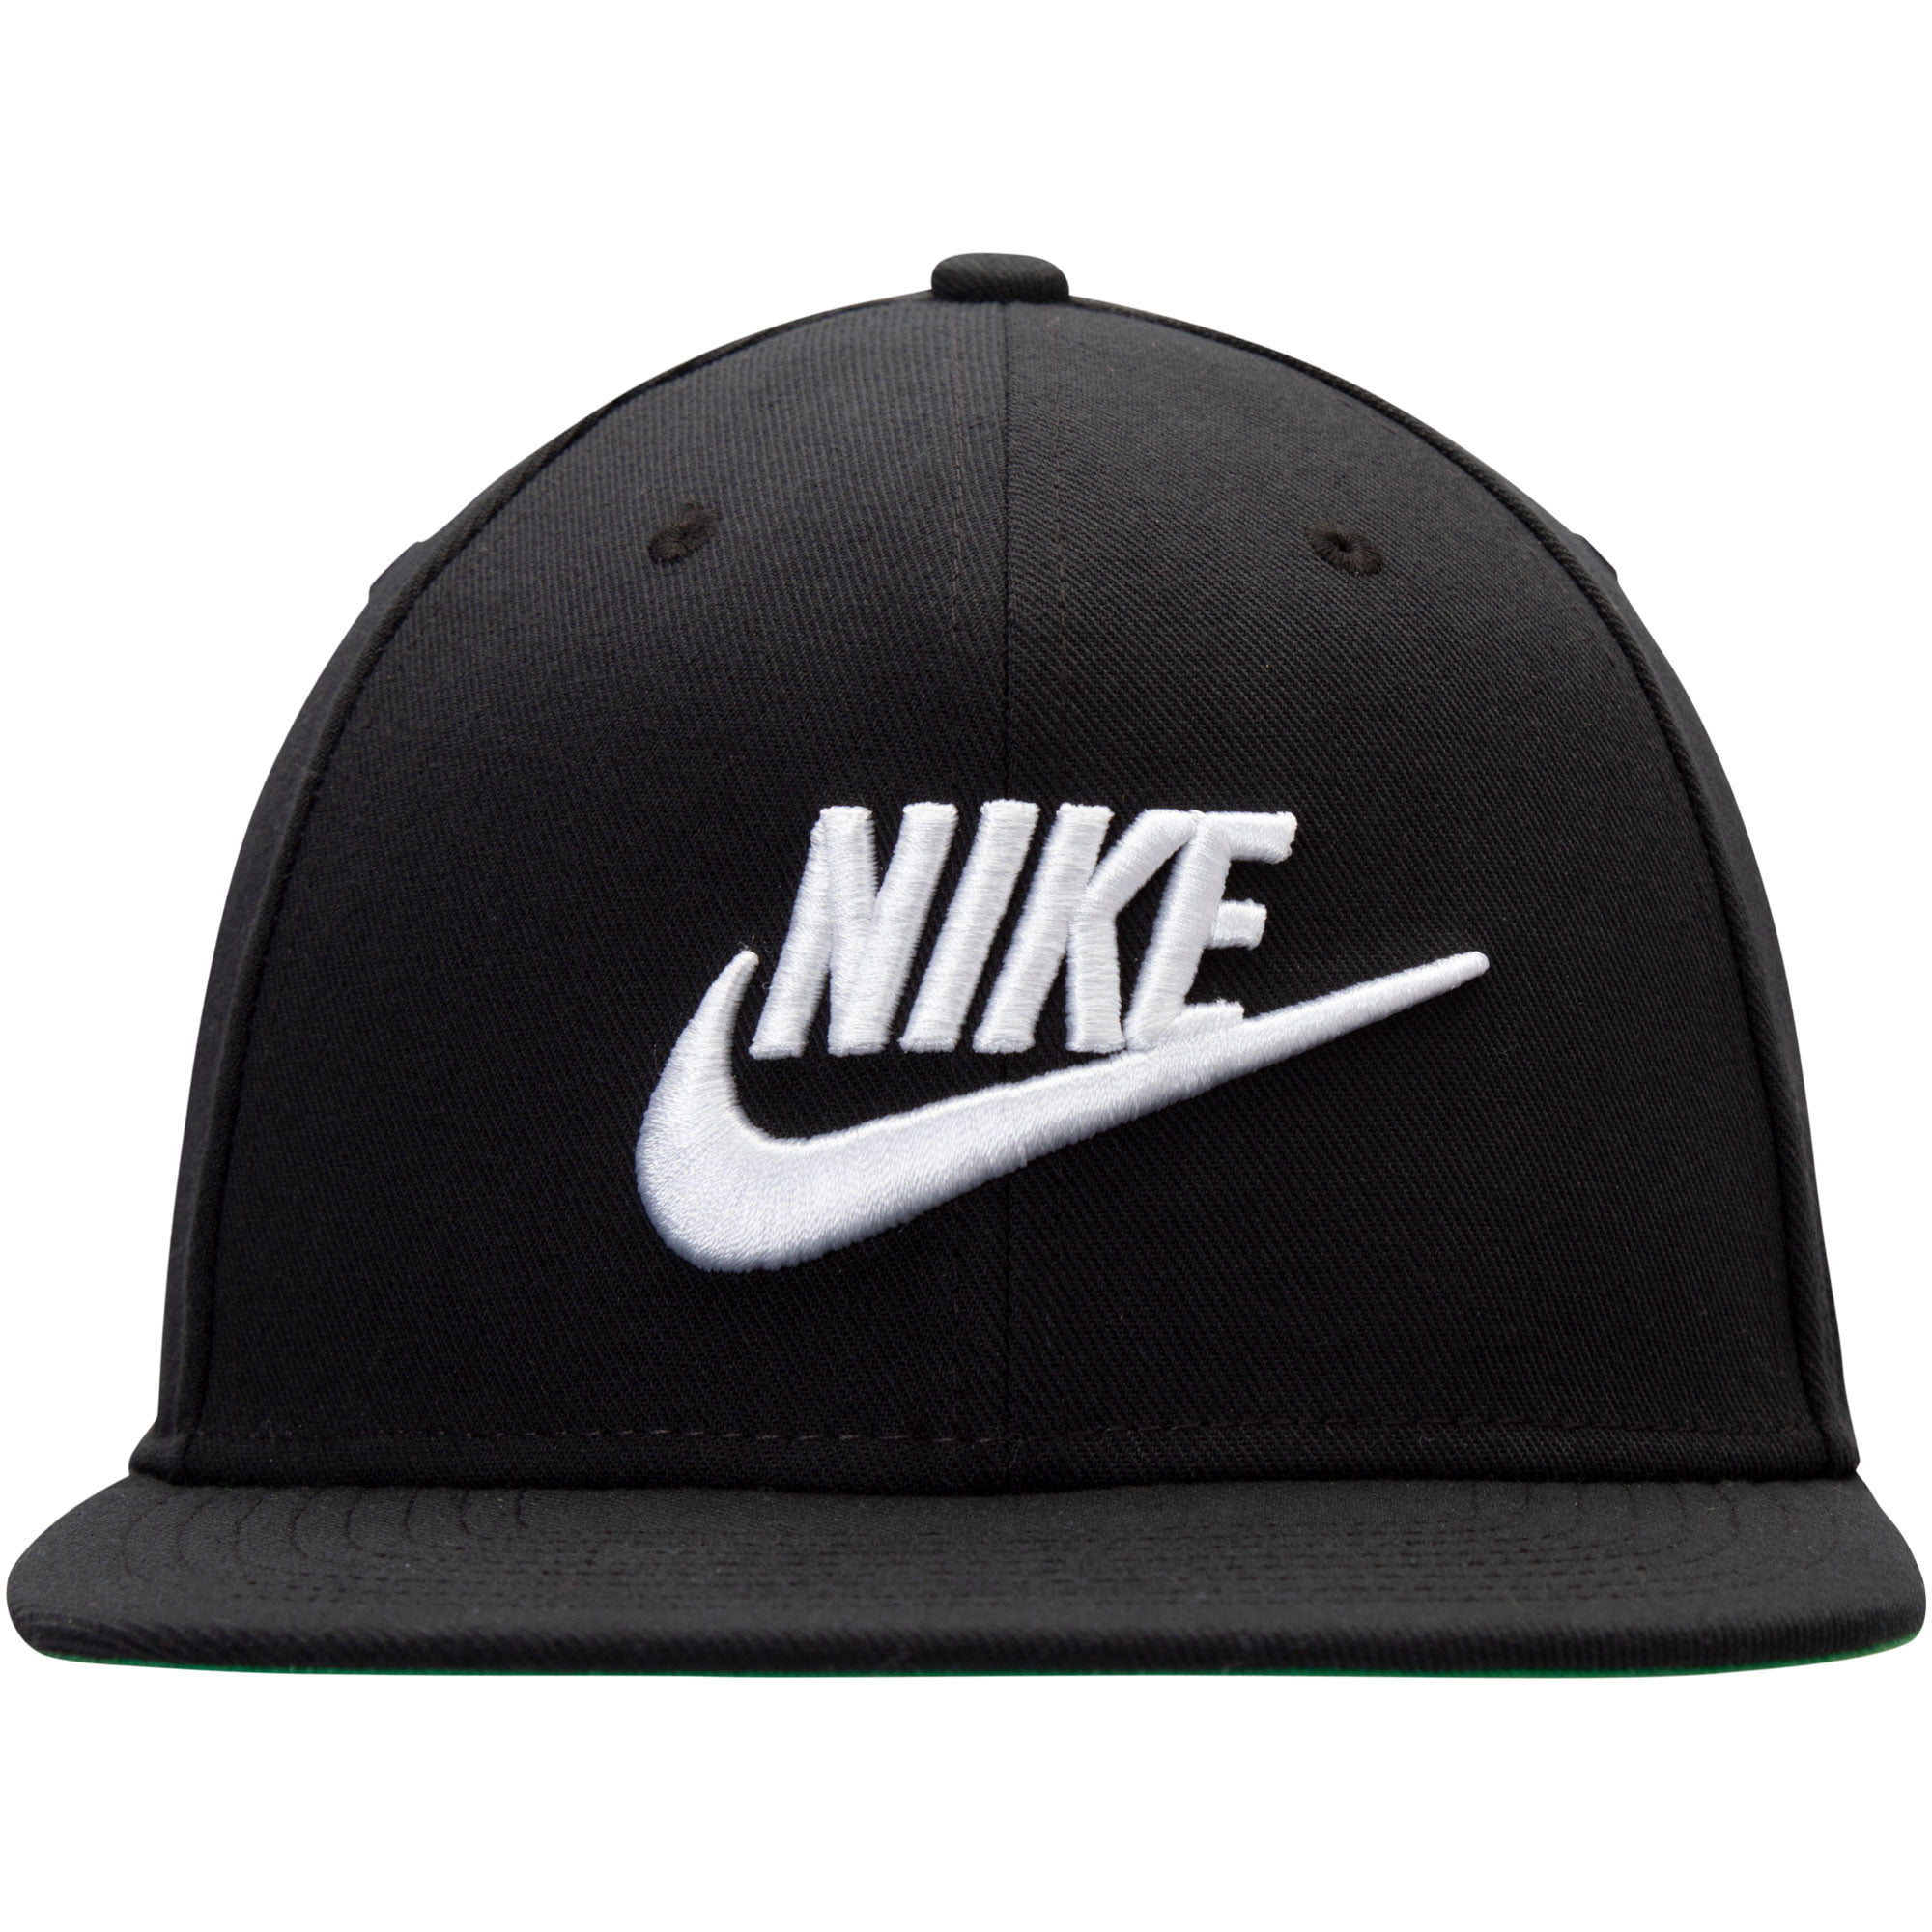 Men's Nike Black Pro Futura Adjustable Snapback Hat - OSFA Walmart.com